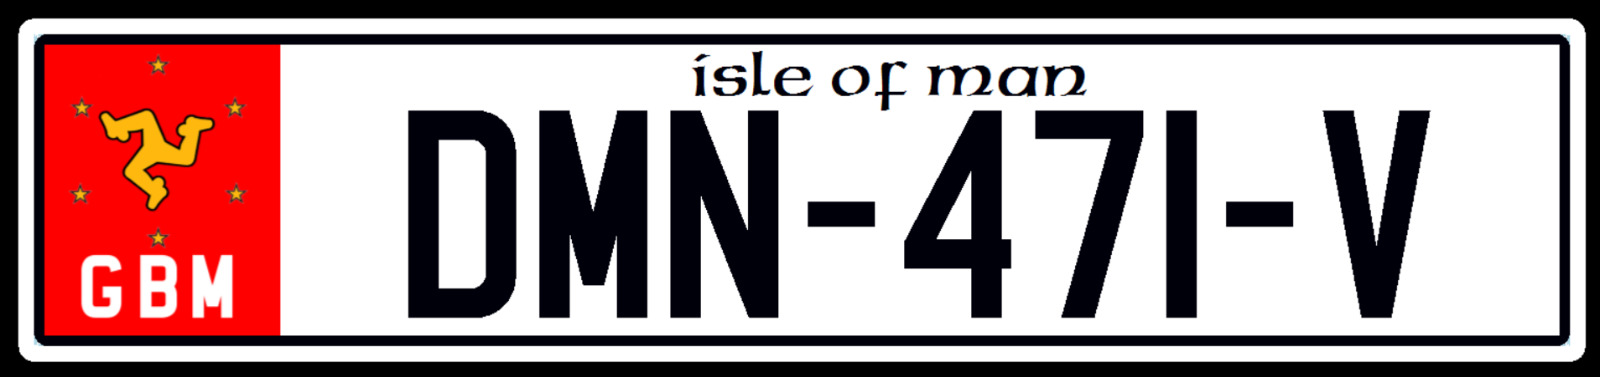 Custom Isle Of Man GBM UK REFLECTIVE License Plate Tag Reproduction, Many Types